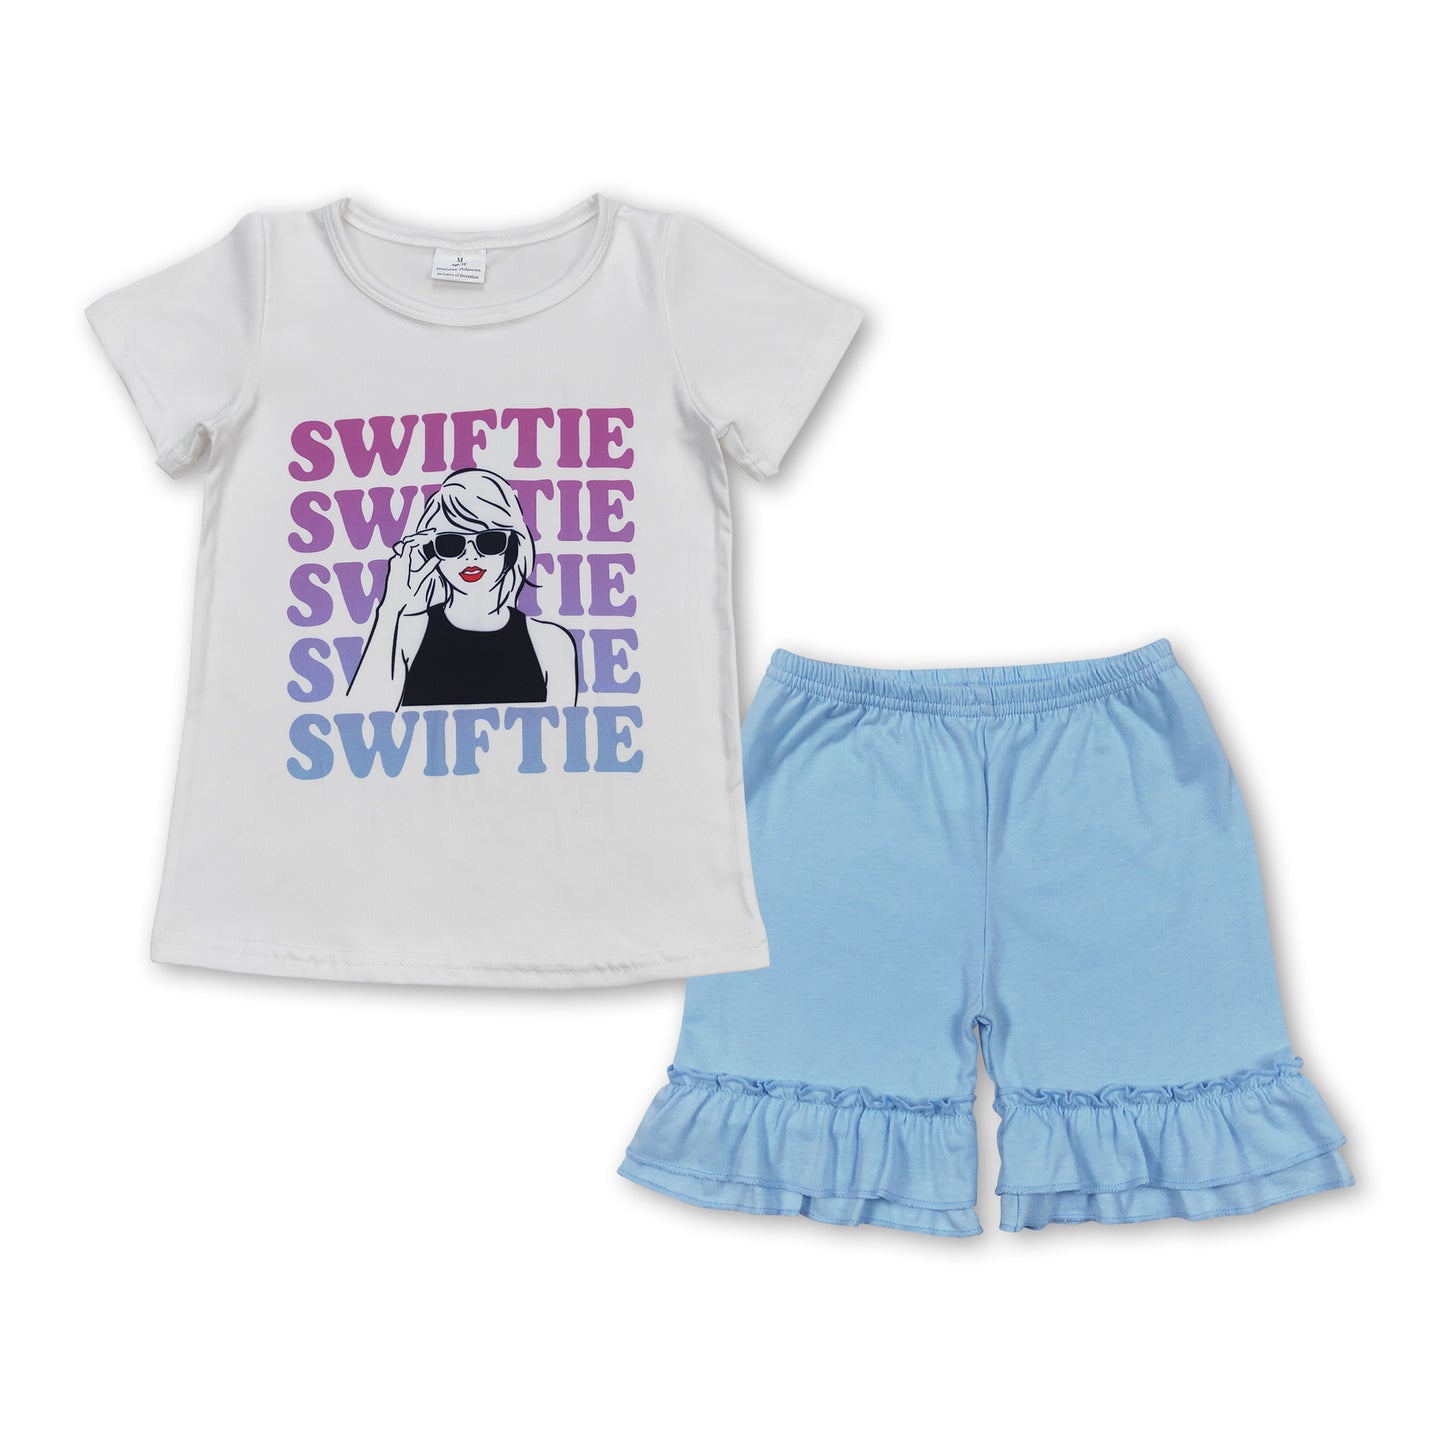 GSSO1392 Singer Swiftie Top Blue Shorts Girls Summer Clothes Set